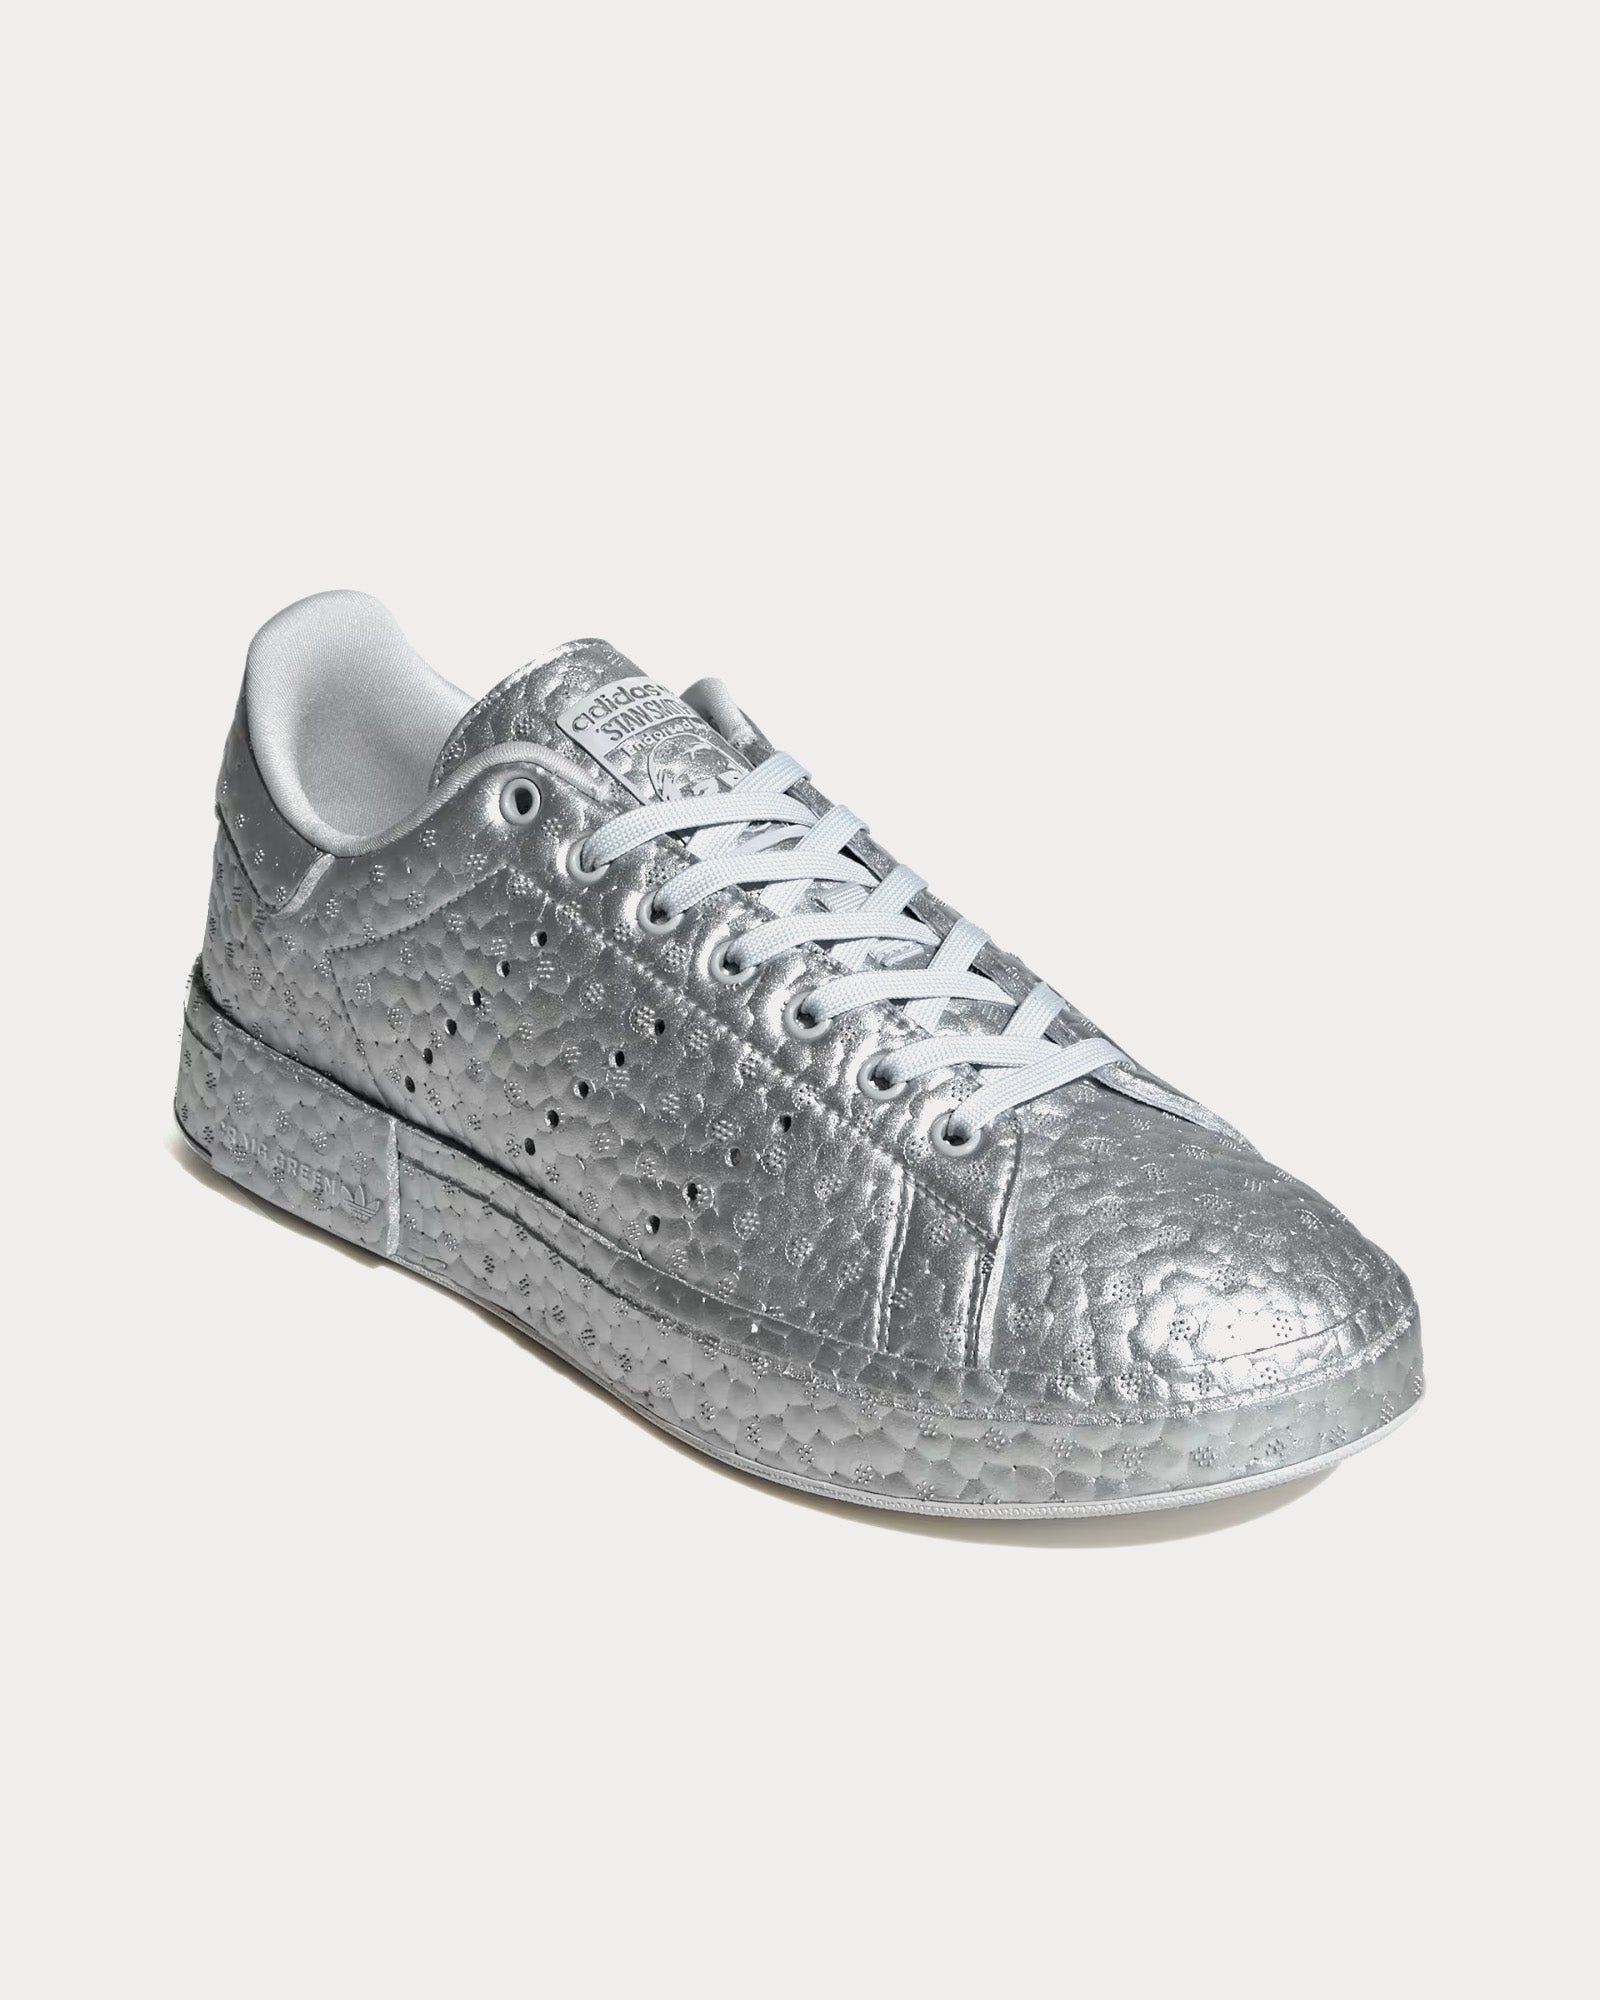 Adidas x Craig Green - Stan Smith Boost Silver Metallic / Silver Metallic / Mgh Solid Grey Low Top Sneakers